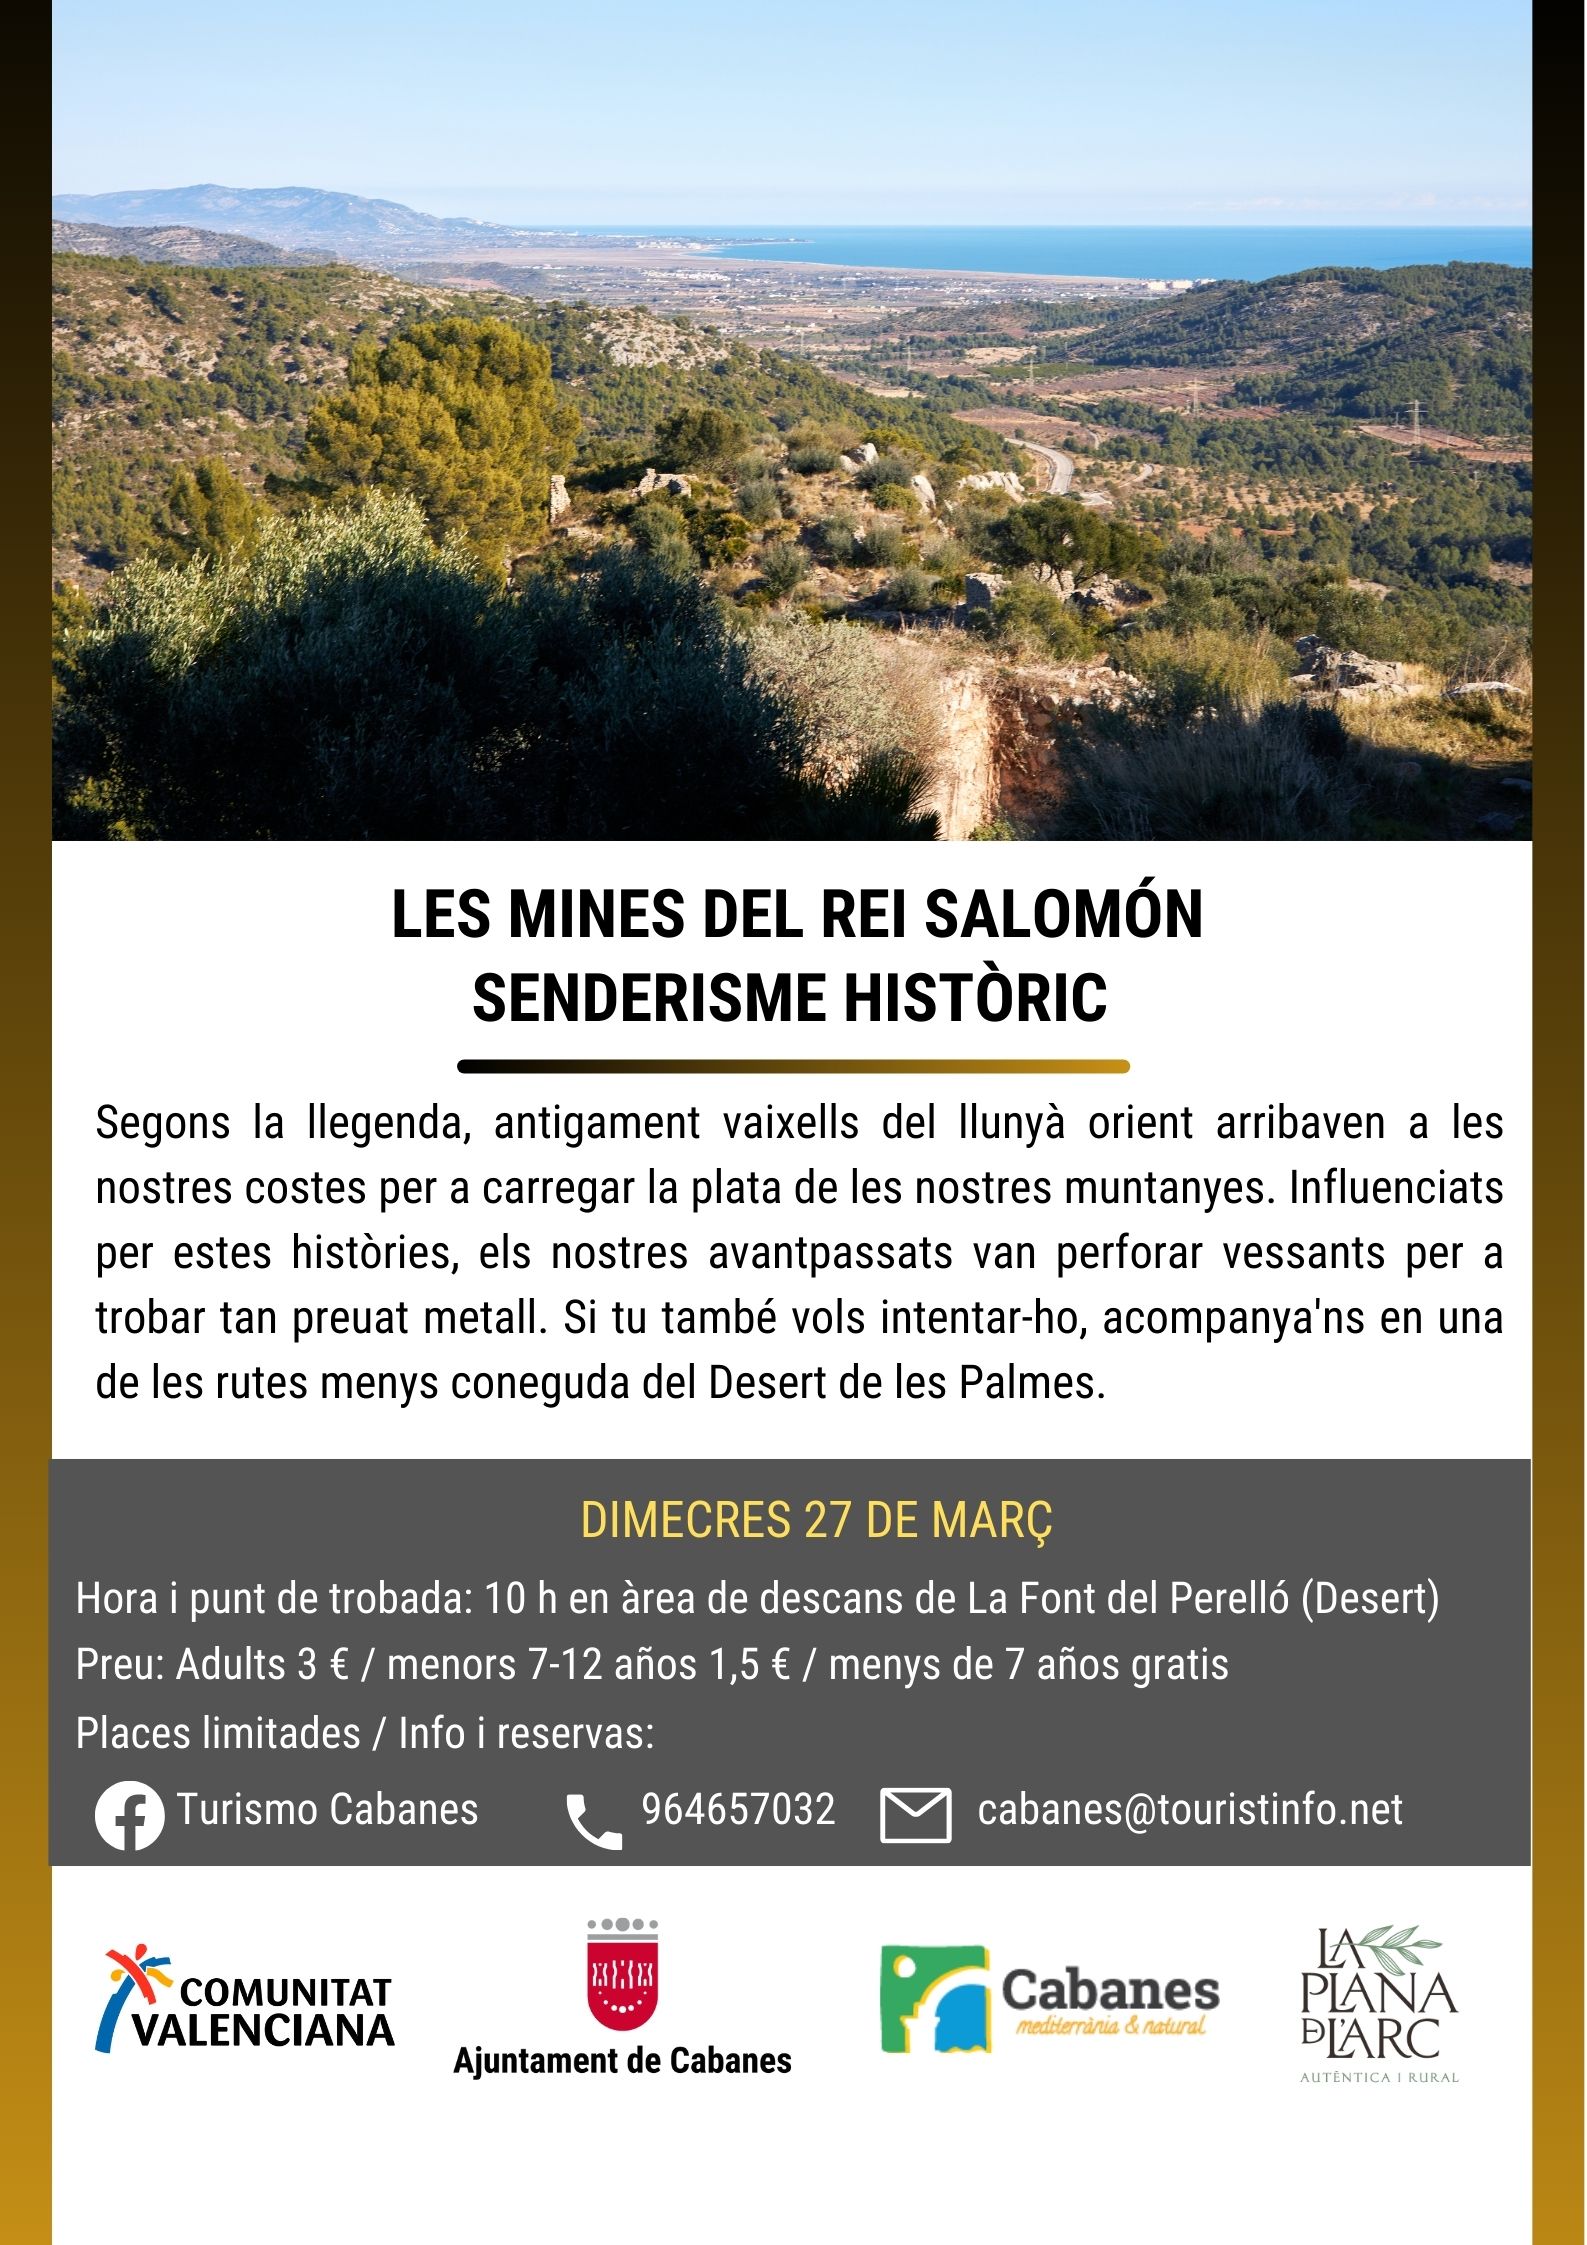 Senderisme: Les mines del rei Salomón